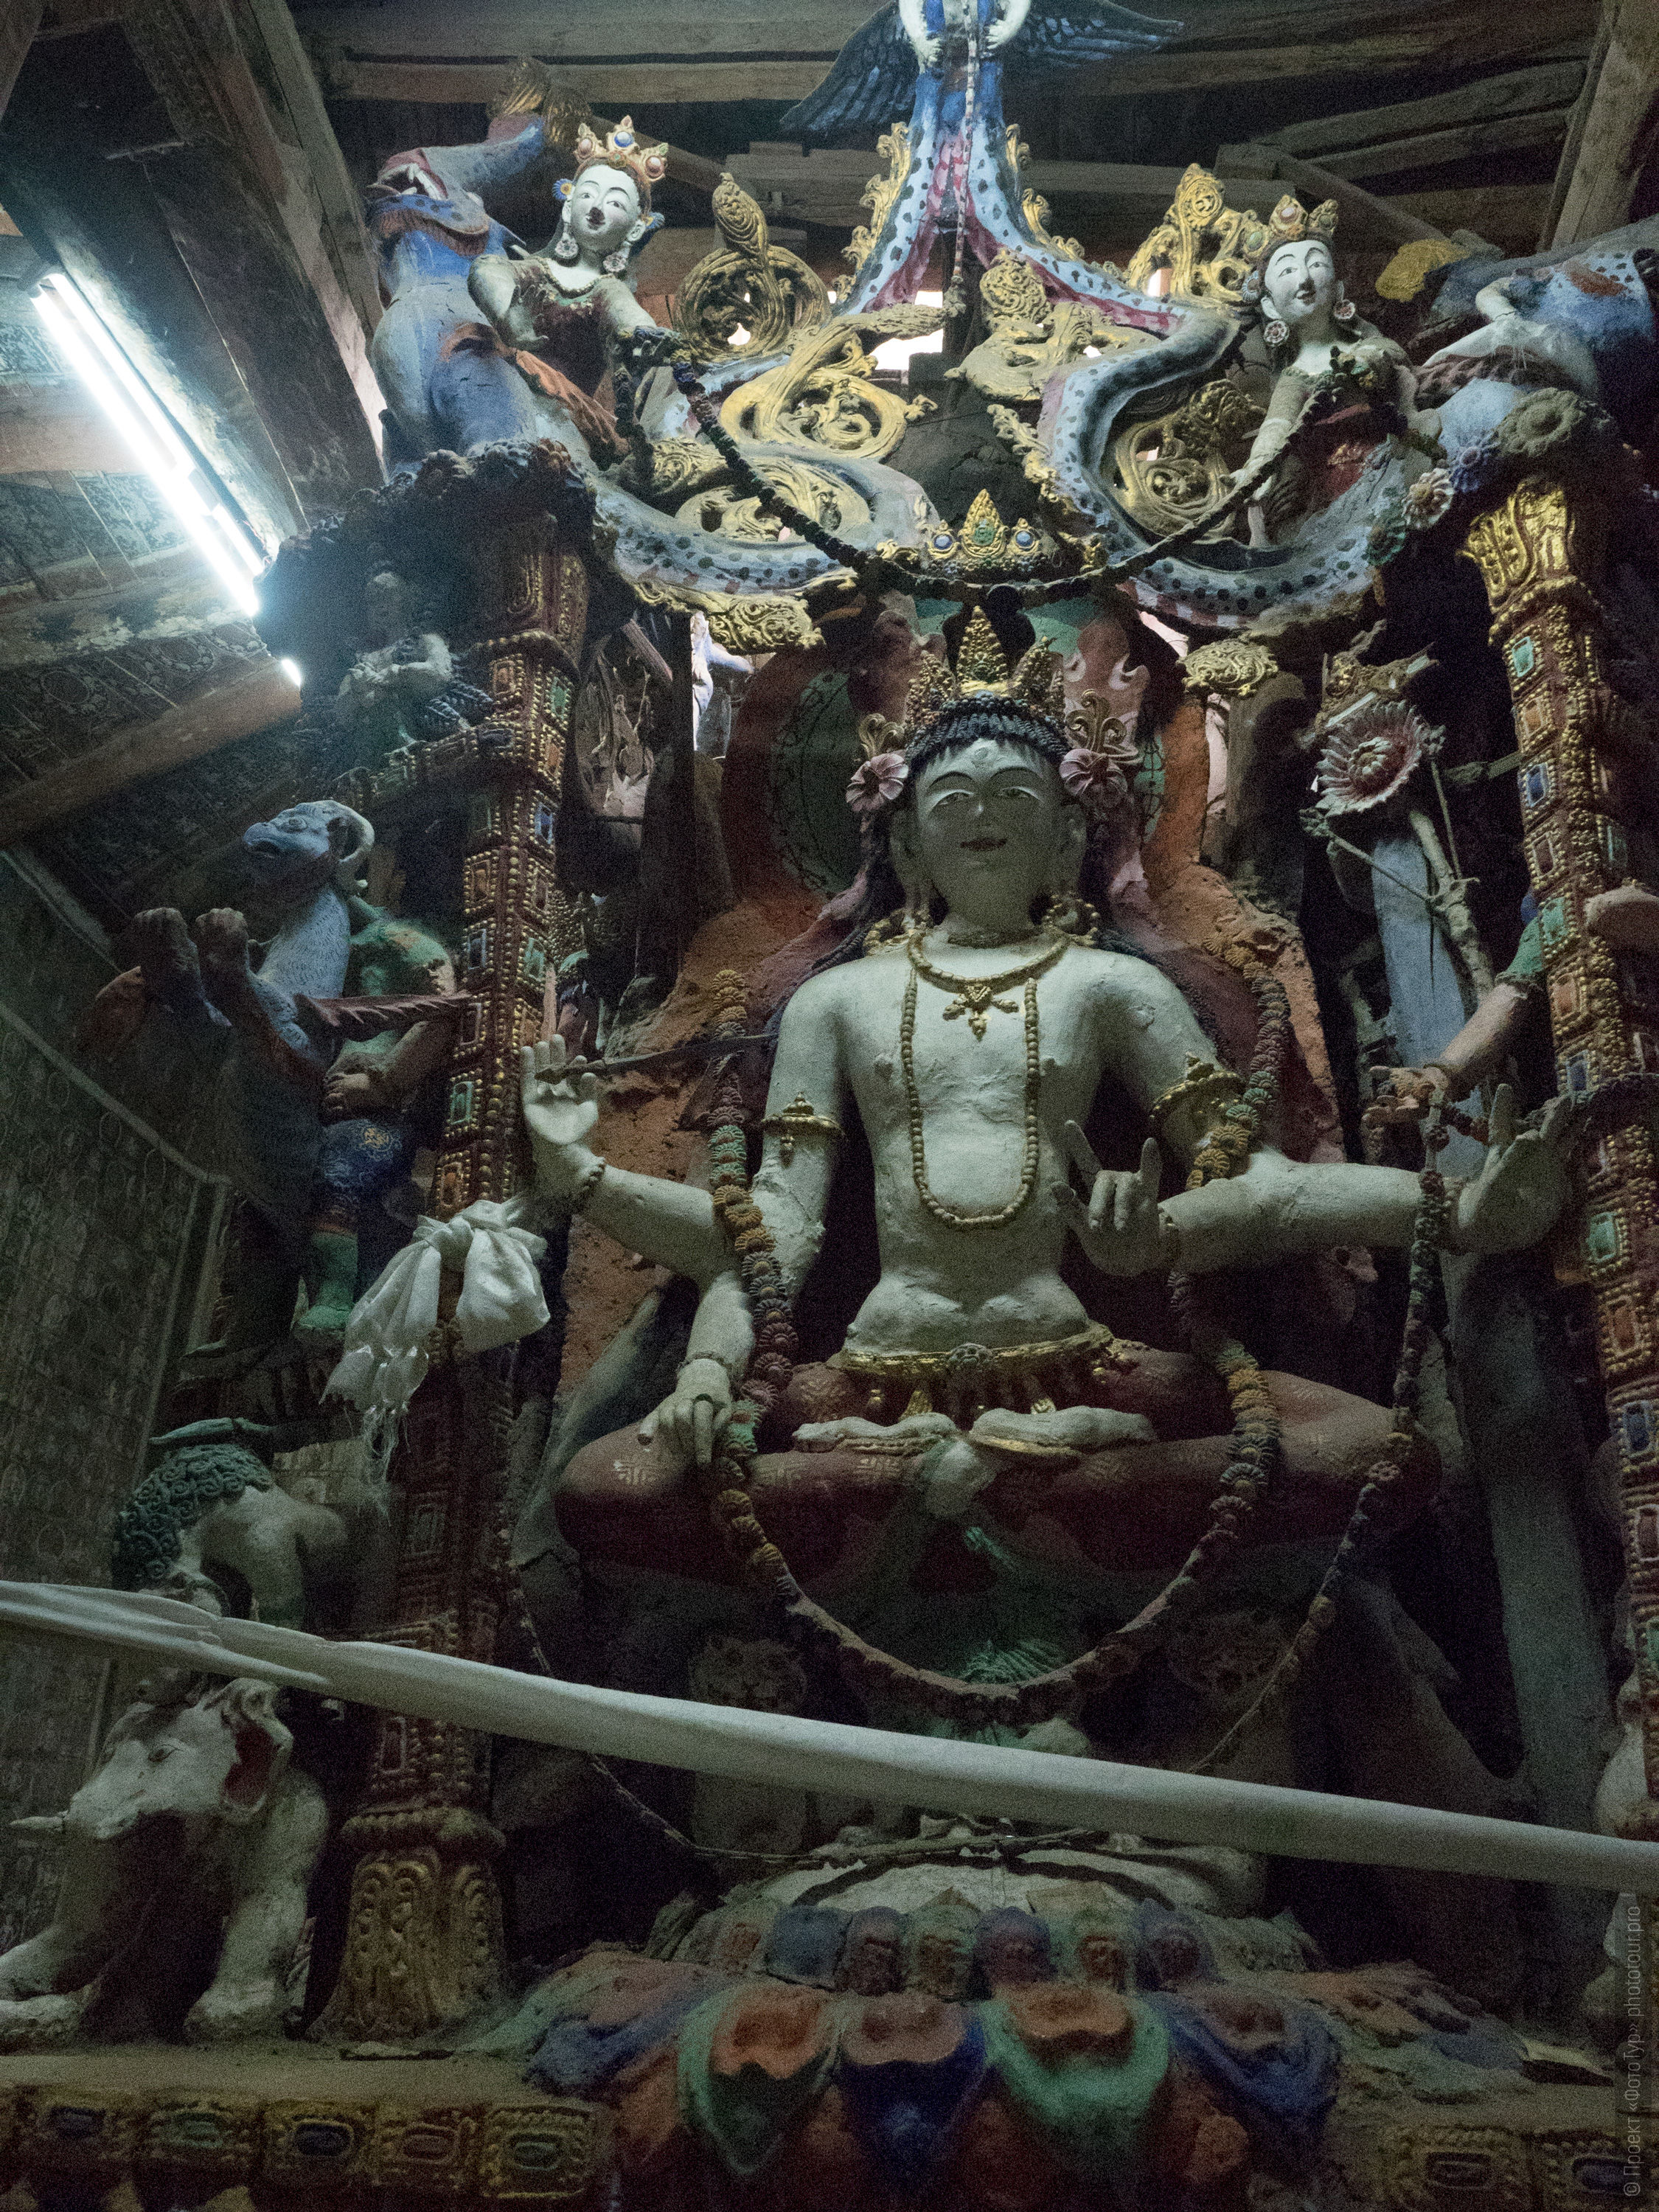 Скульптура Манджушри в гонпе  Манджушри буддийского монастыря Алчи, Ладакх, Северная Индия.